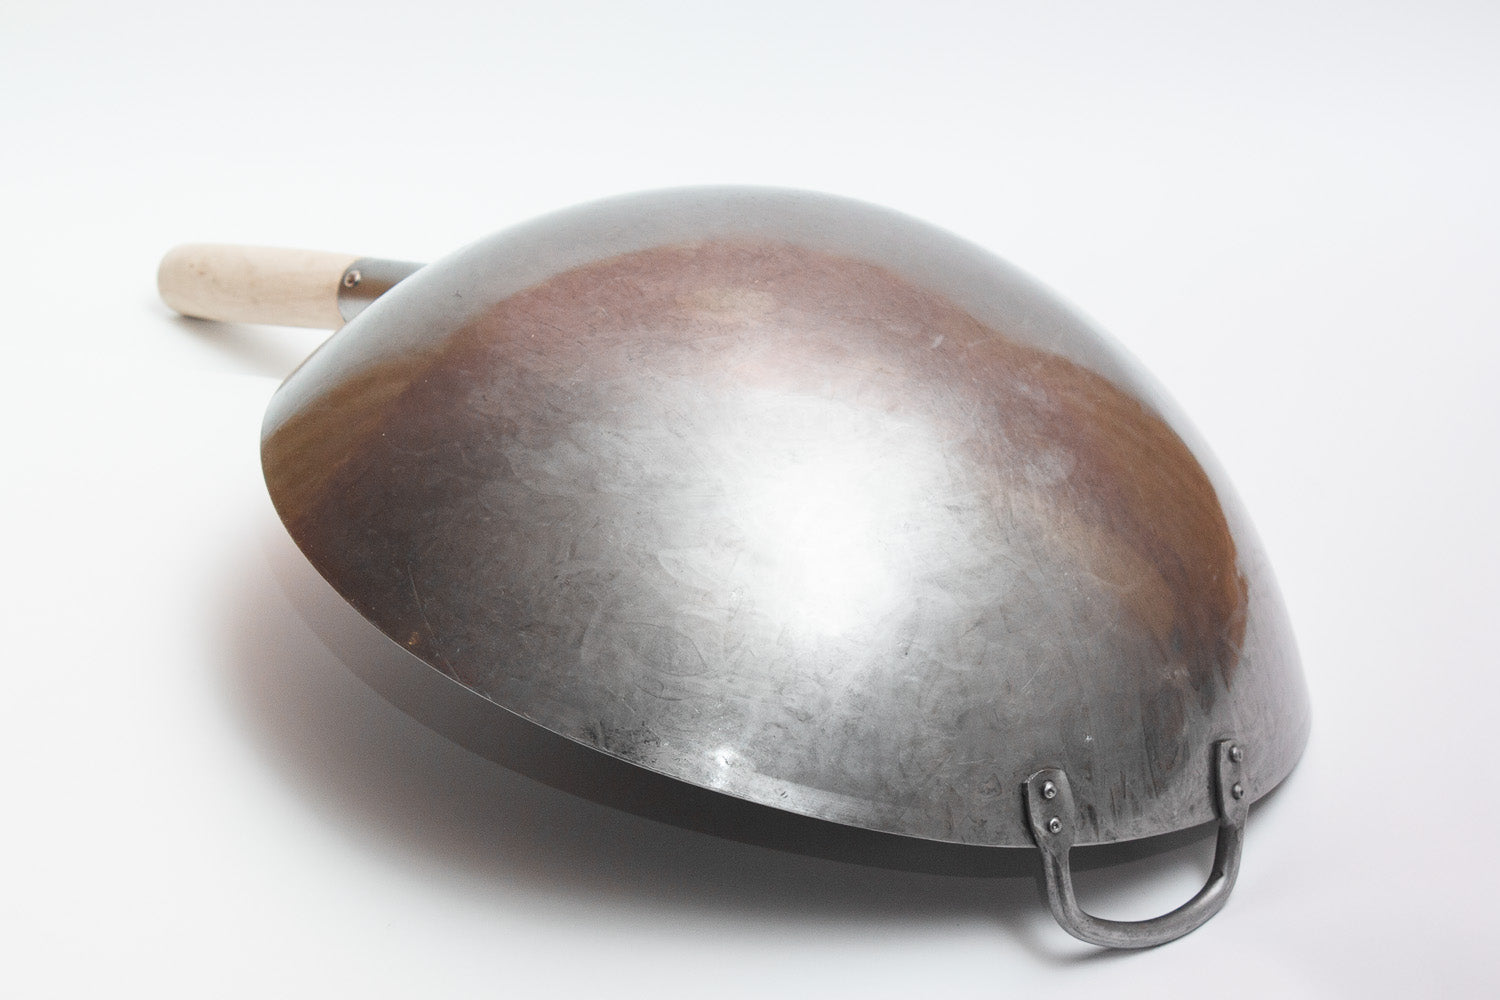 16 inch Carbon Steel Craft Wok with Wooden and Steel Helper Handle (Round Bottom) / 731W138